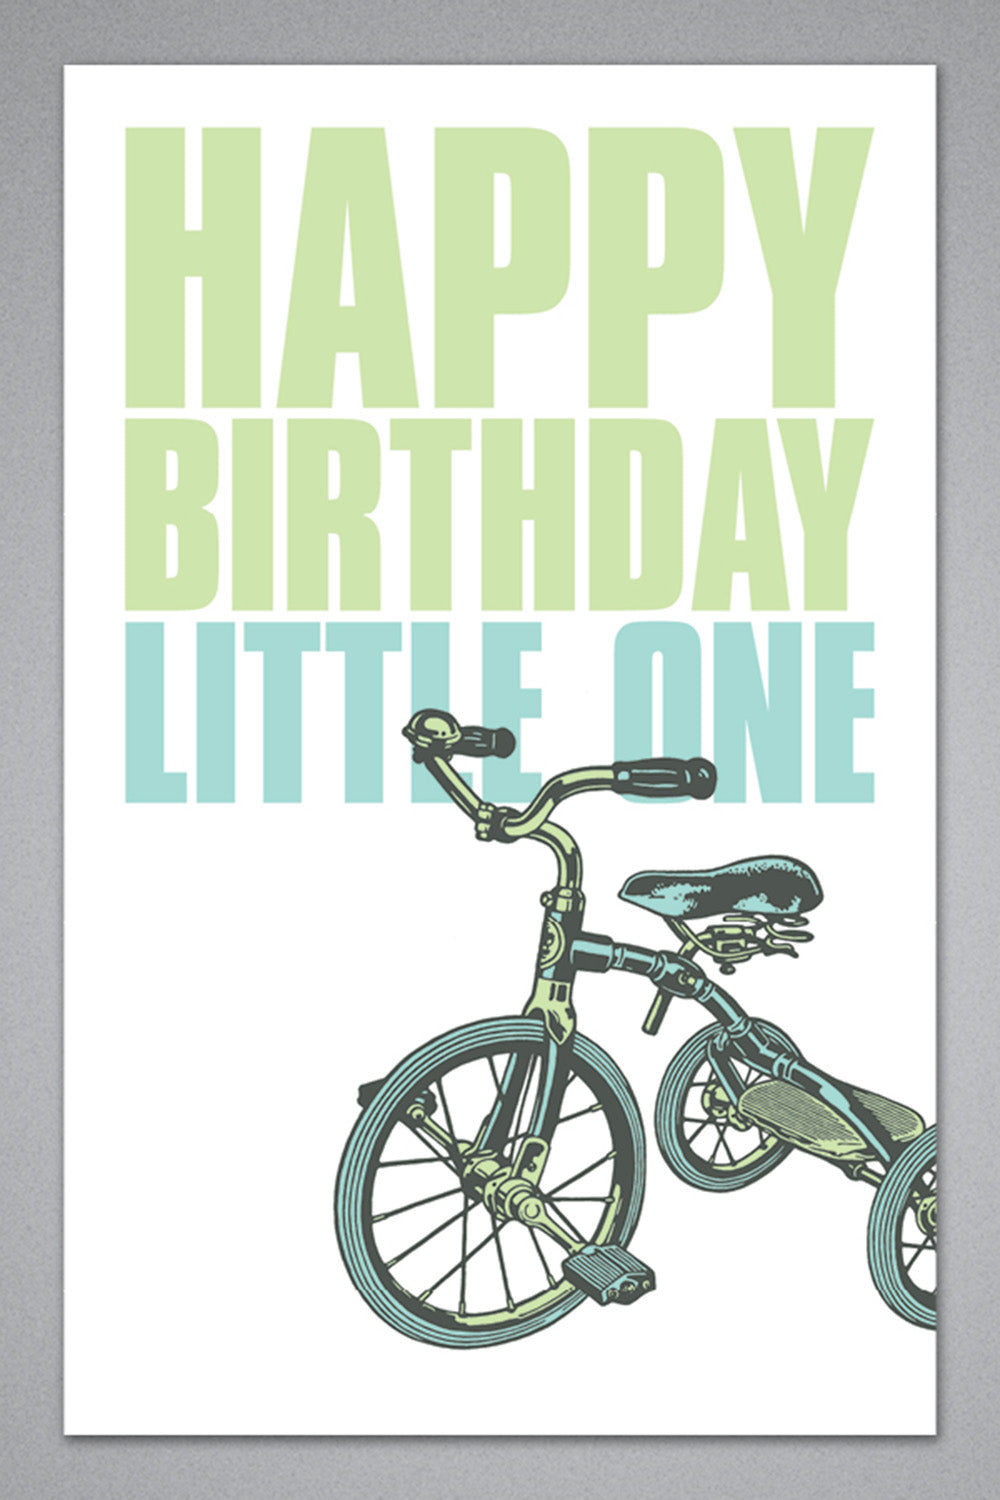 Breathless Greeting Card - Happy Birthday Little One